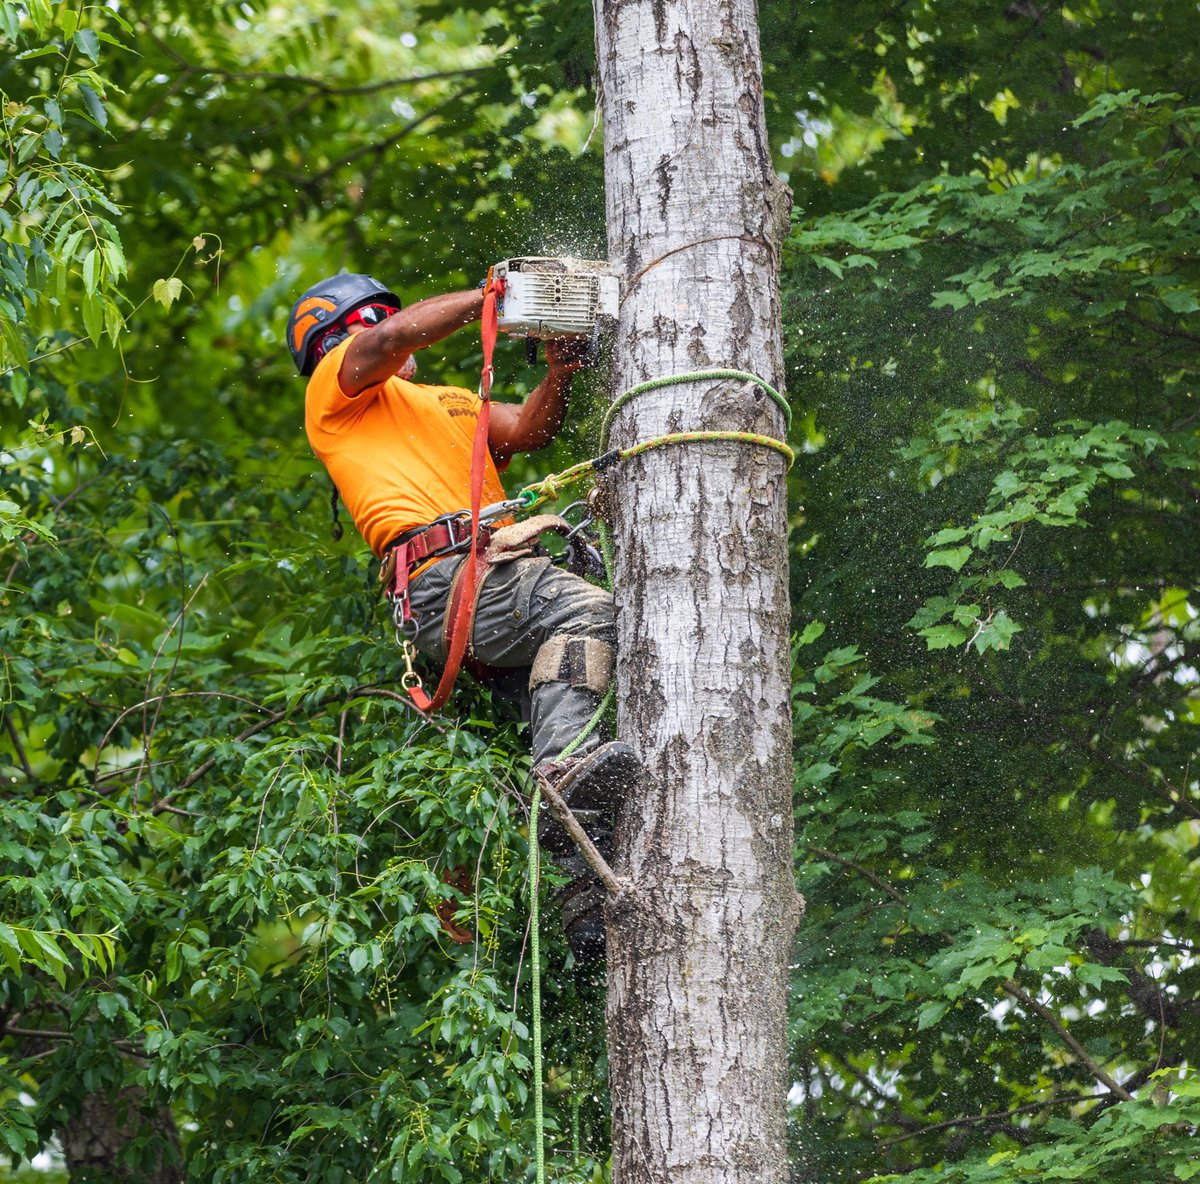 Climbing In Style 😎

-
-
-
-
-
-
-
#treework #arborist #stihl #treelife #arblife  #treecare #treeclimbing #treesurgeon #treeclimber #chainsaw #logger #tree #treeremoval #treeservice #arboriculture #trees #arboristsofinstagram #husqvarna #arboristlife #treefelling #treecutting